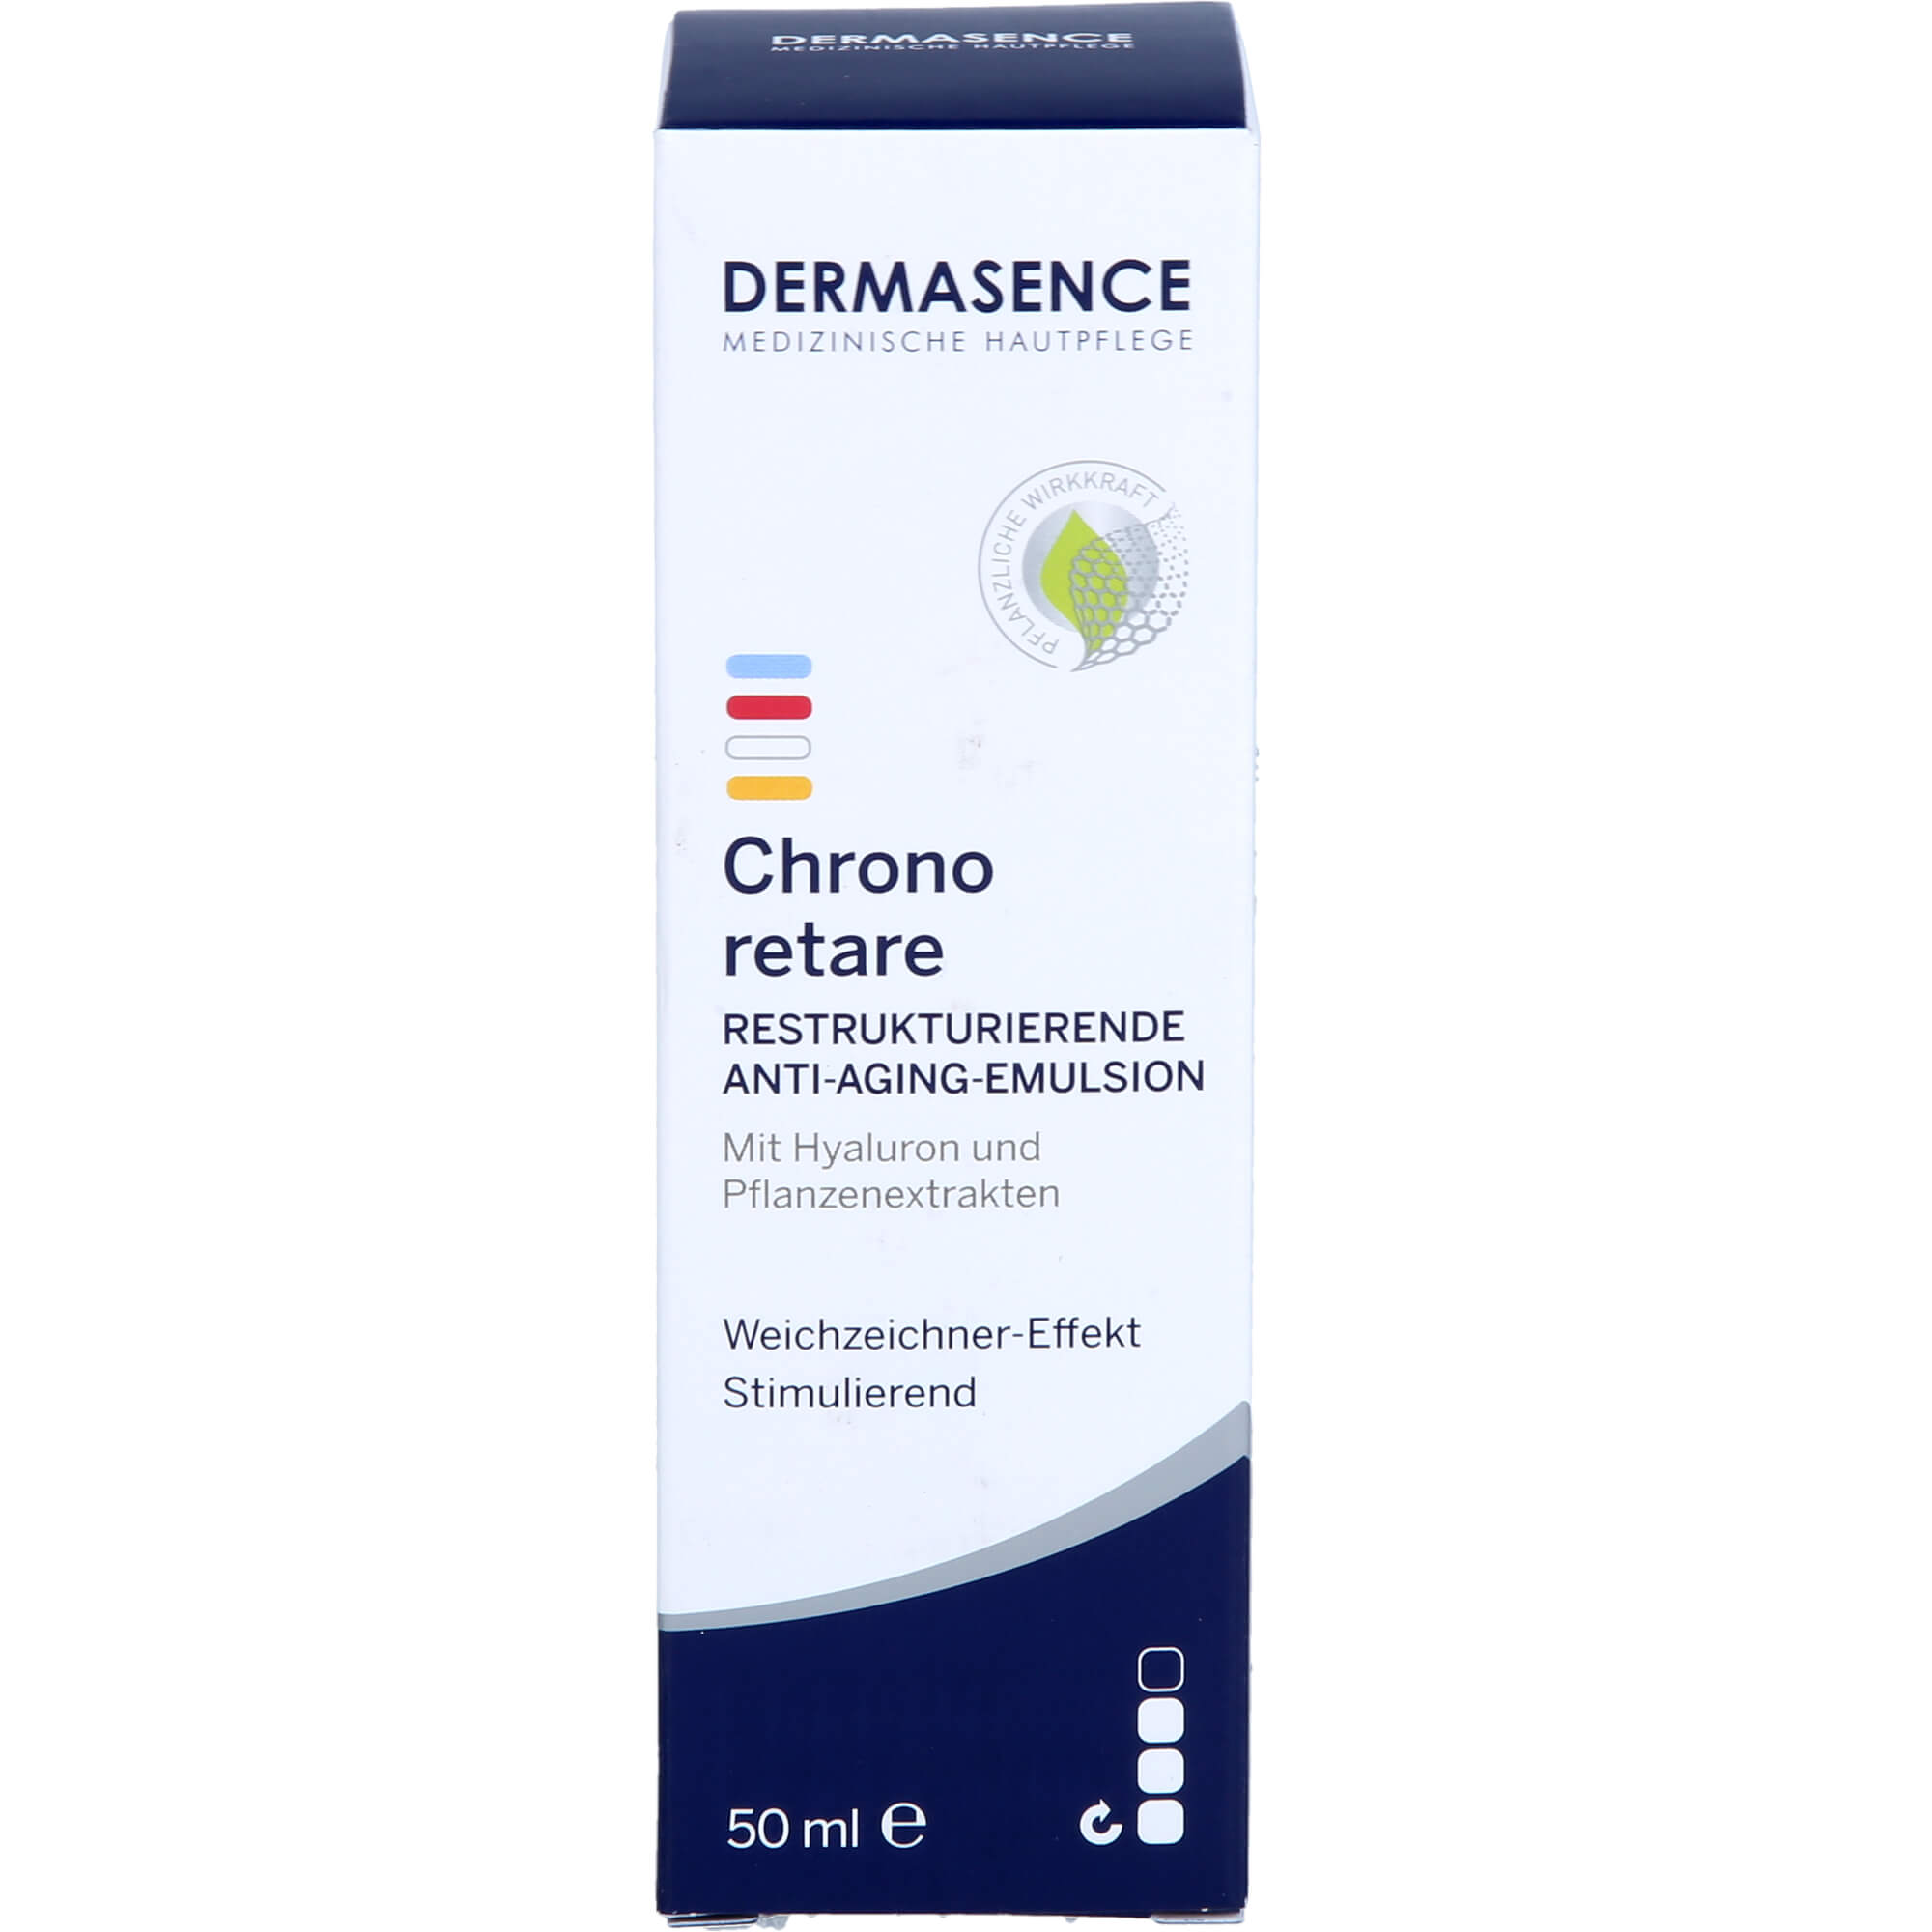 DERMASENCE Chrono retare Restr.Anti-Aging-Emulsion